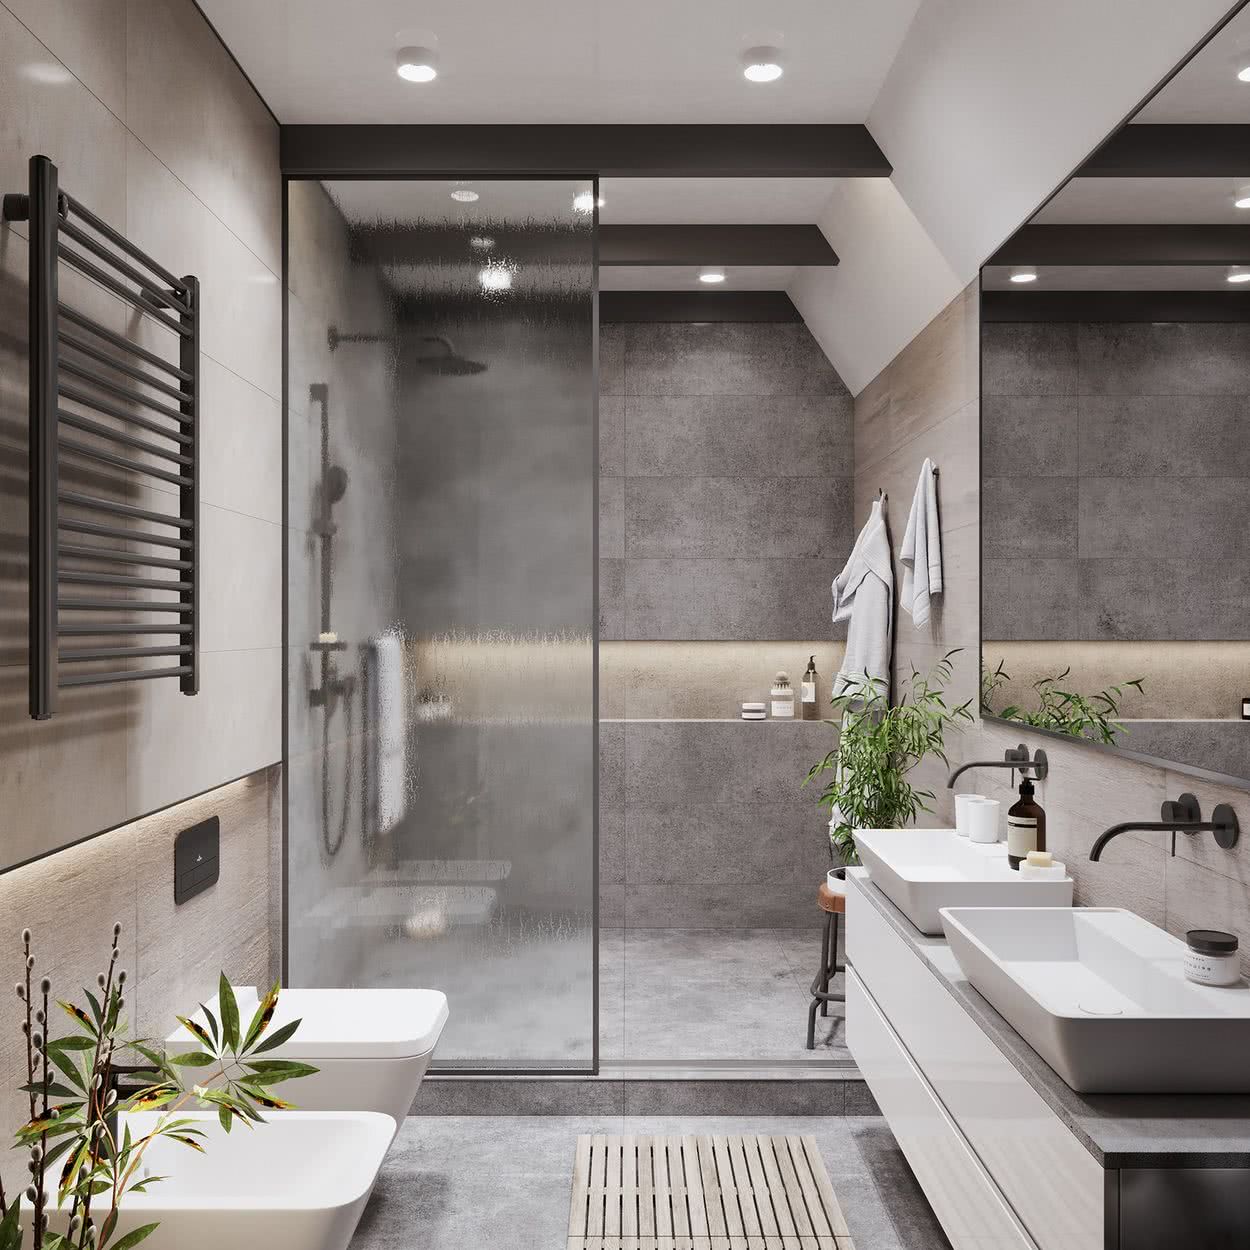 Modern Bathrooms 2021 2020 - Designs Models Decoration - Decor Scan ...